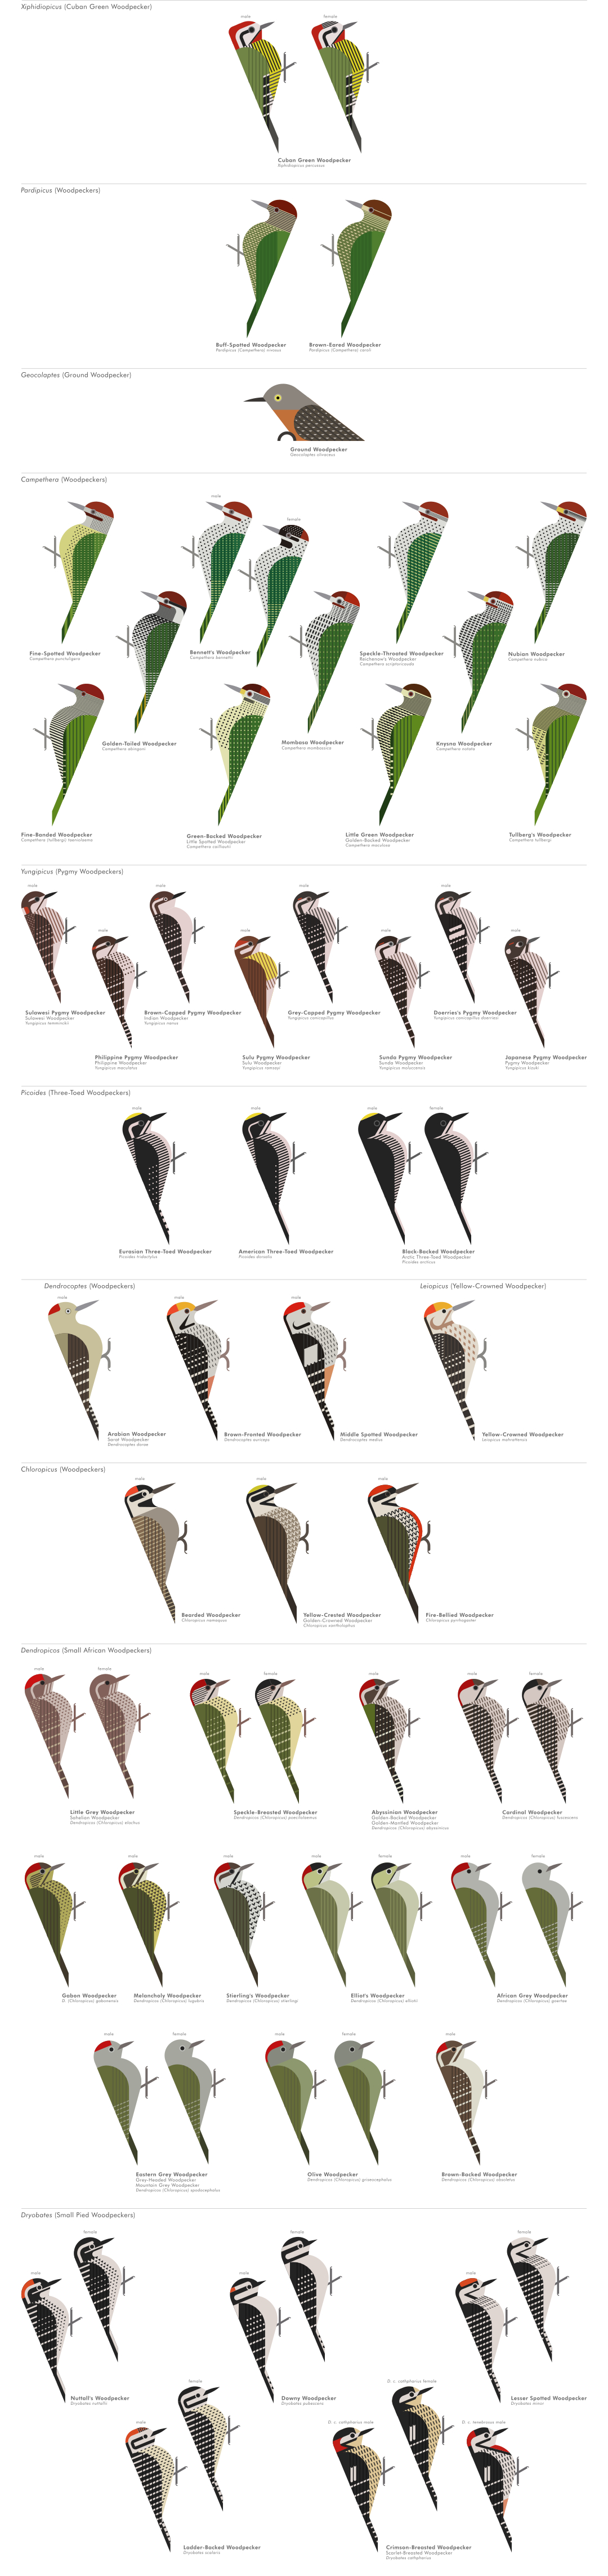 scott partridge - ave - avian vector encyclopedia - woodpeckers - piciformes - vector bird art